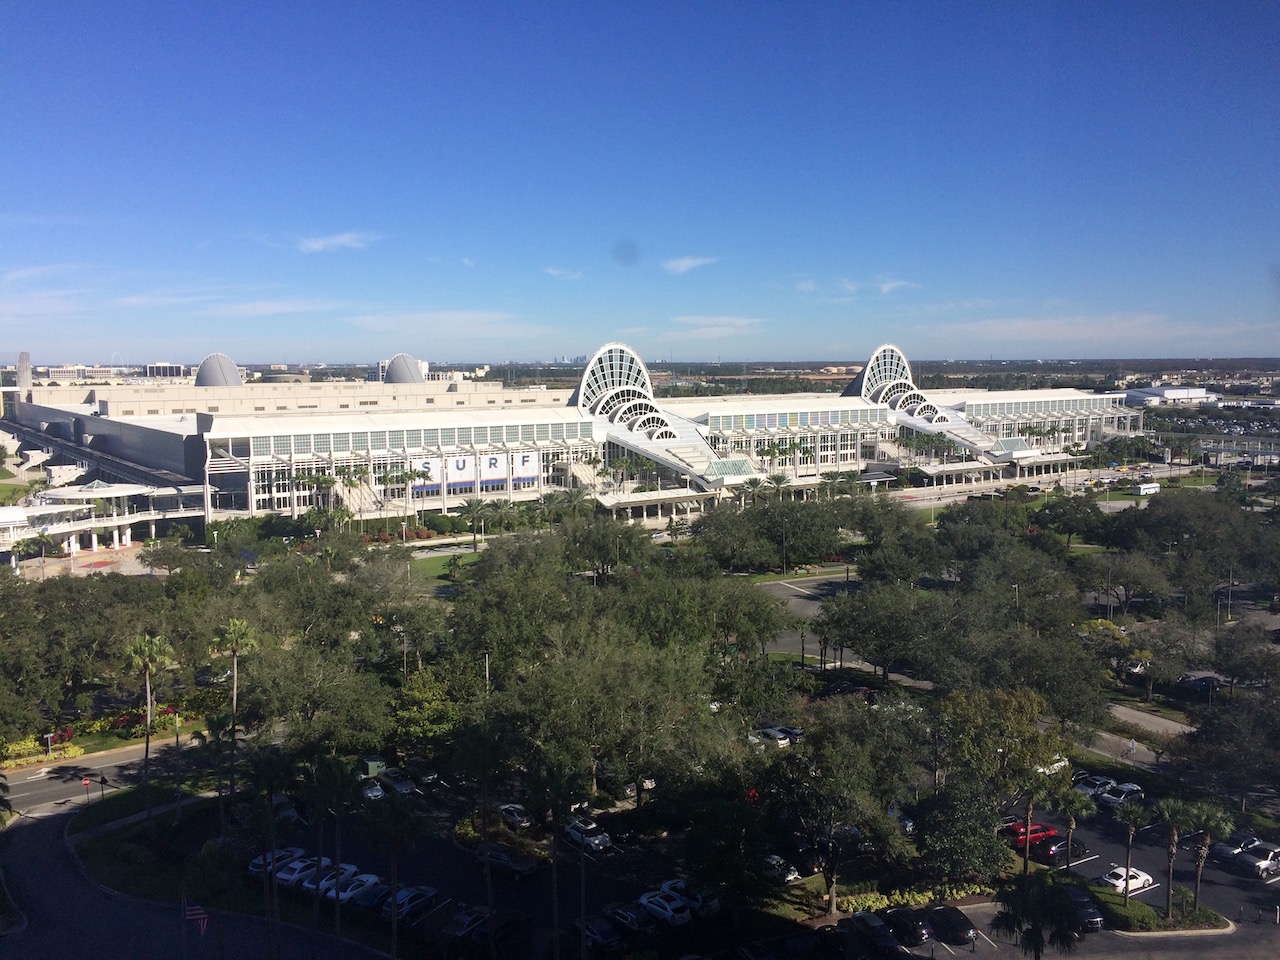 1 Orange county convention centre, Orlando, home of Surf Expo